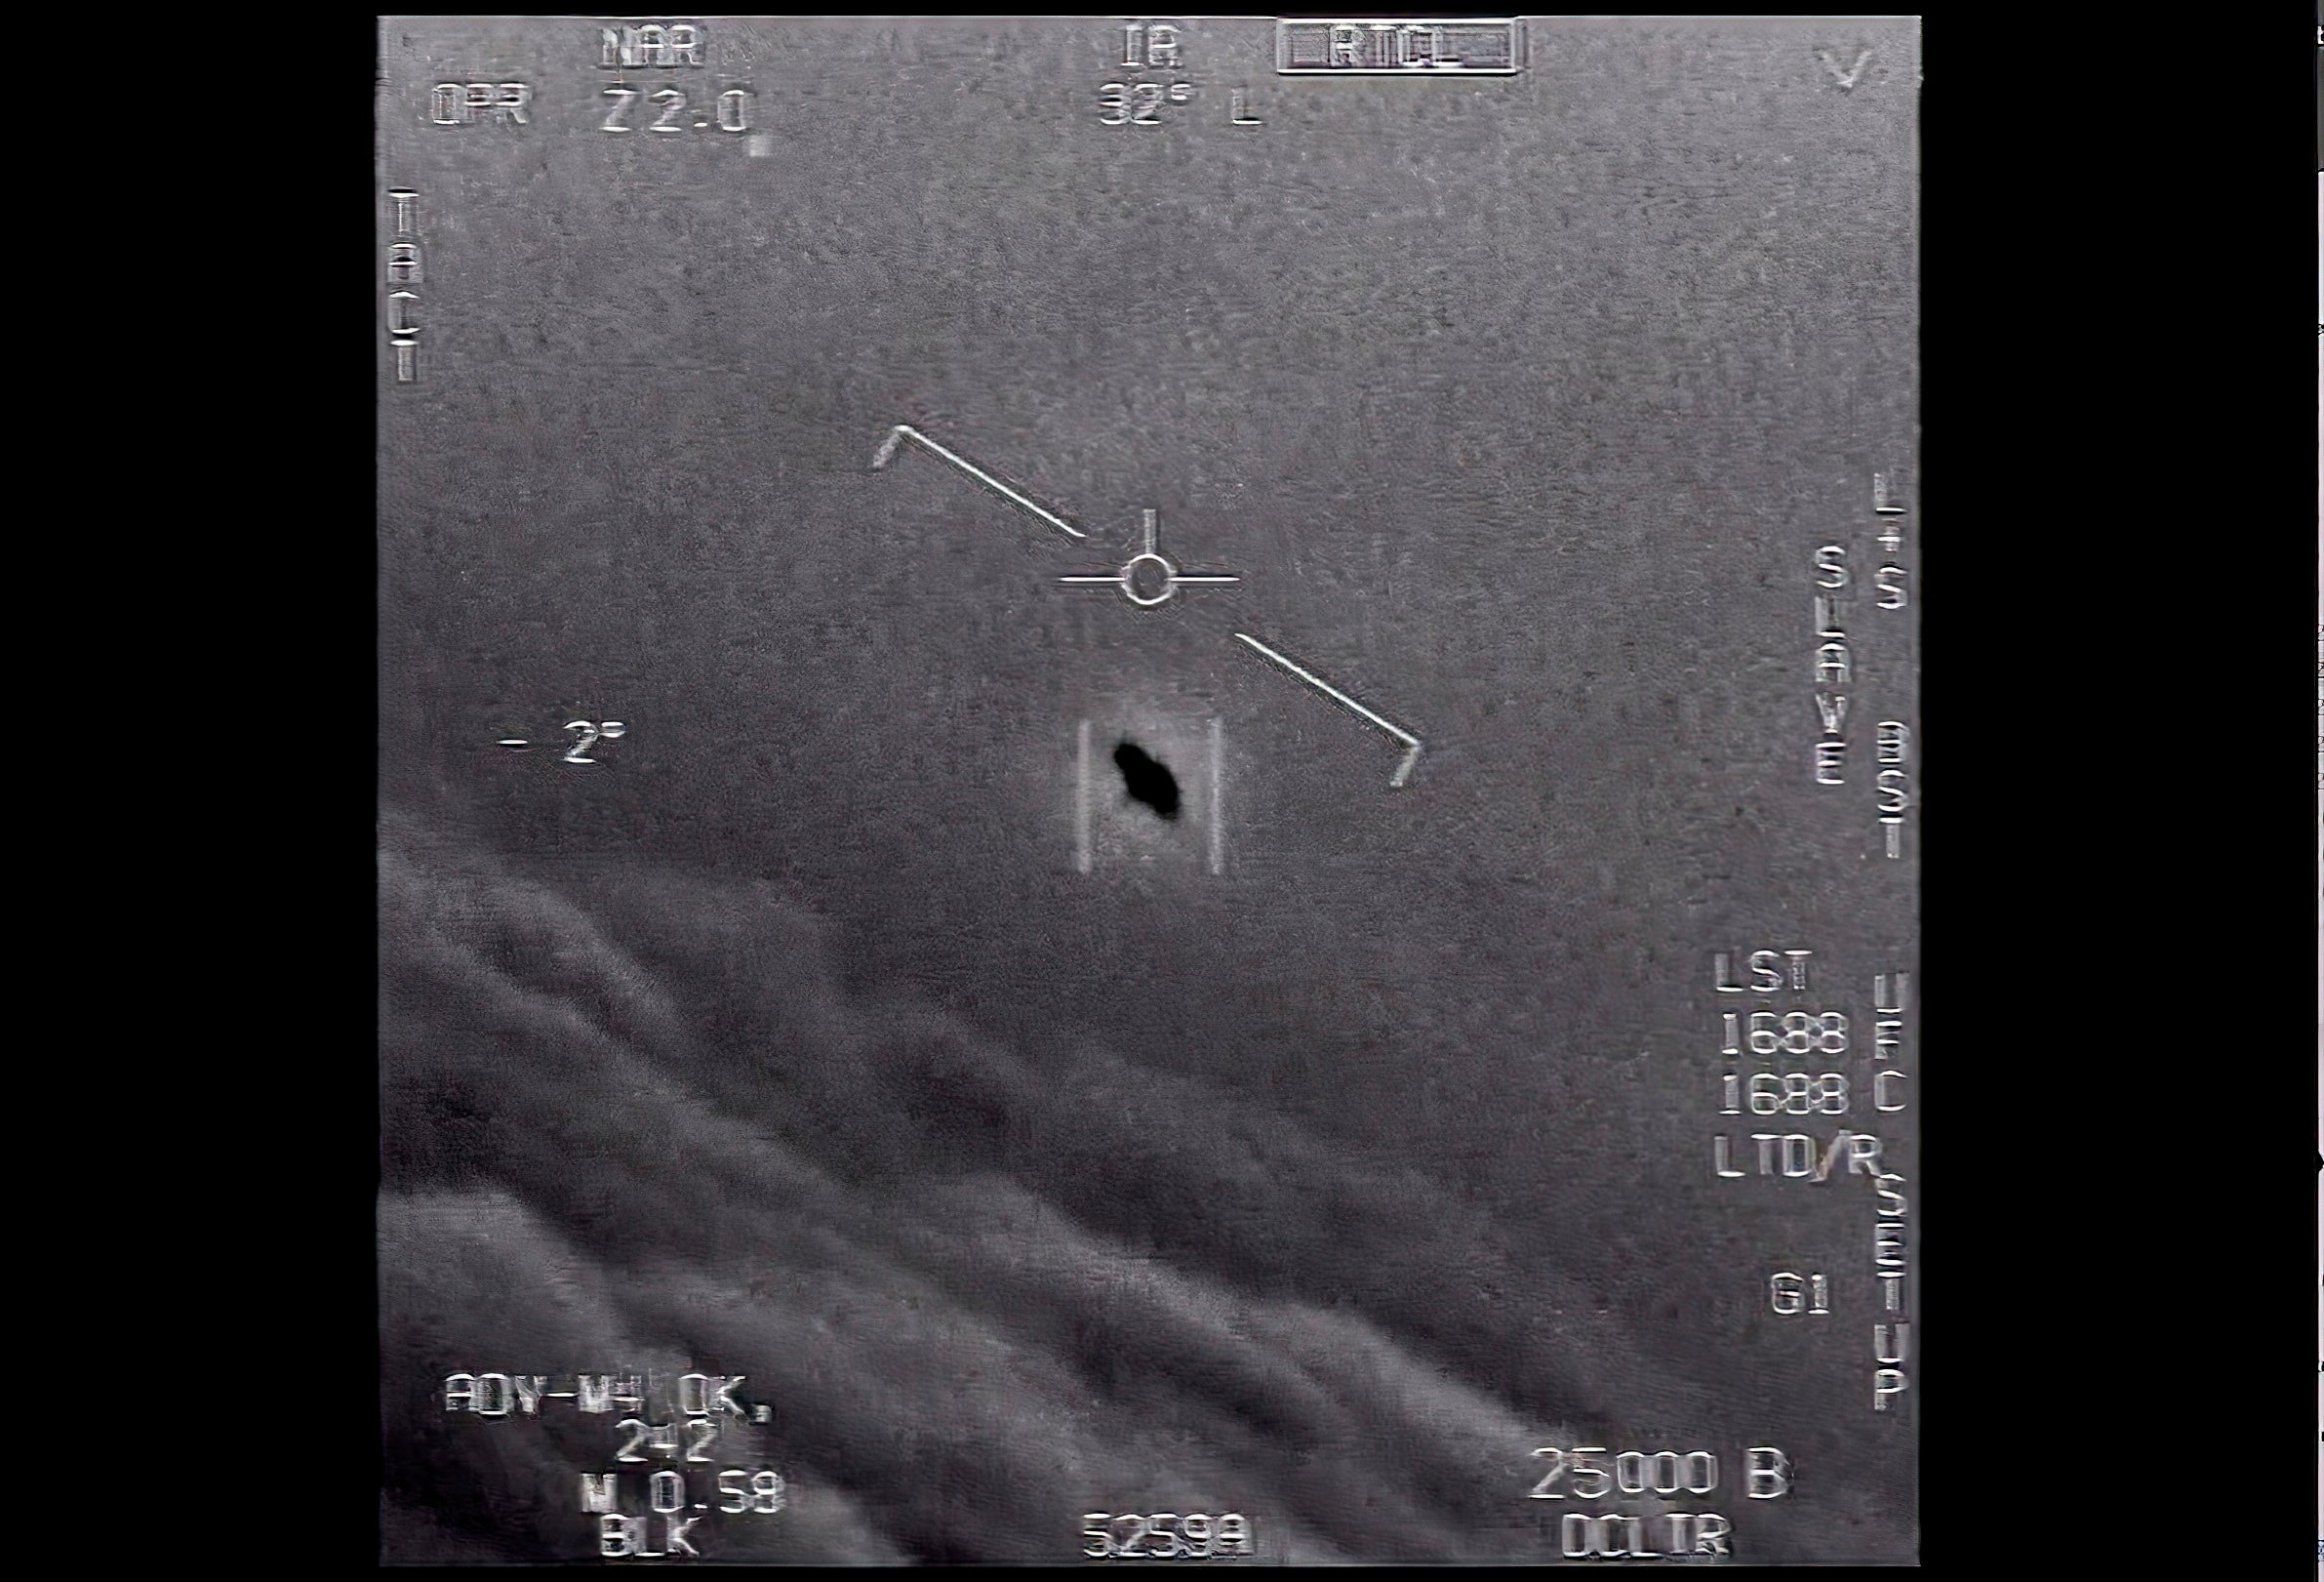 UFOs Investigation